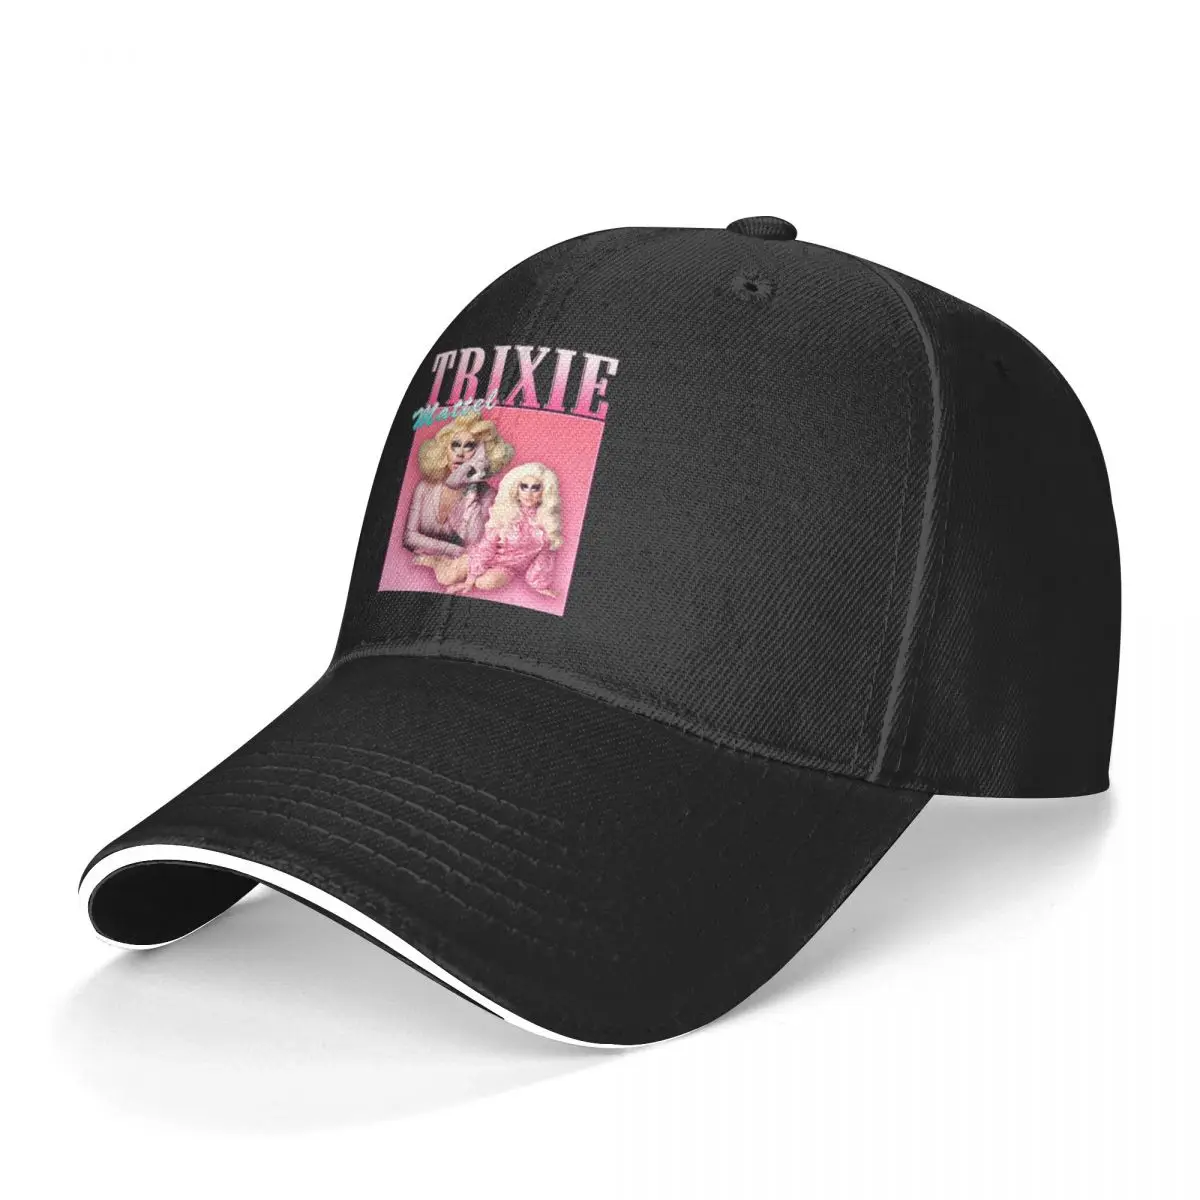 Trixie Mattel Baseball Cap Drag Queen Kpop Trucker Hat Dropshipping Female Vintage Logo Snapback Cap